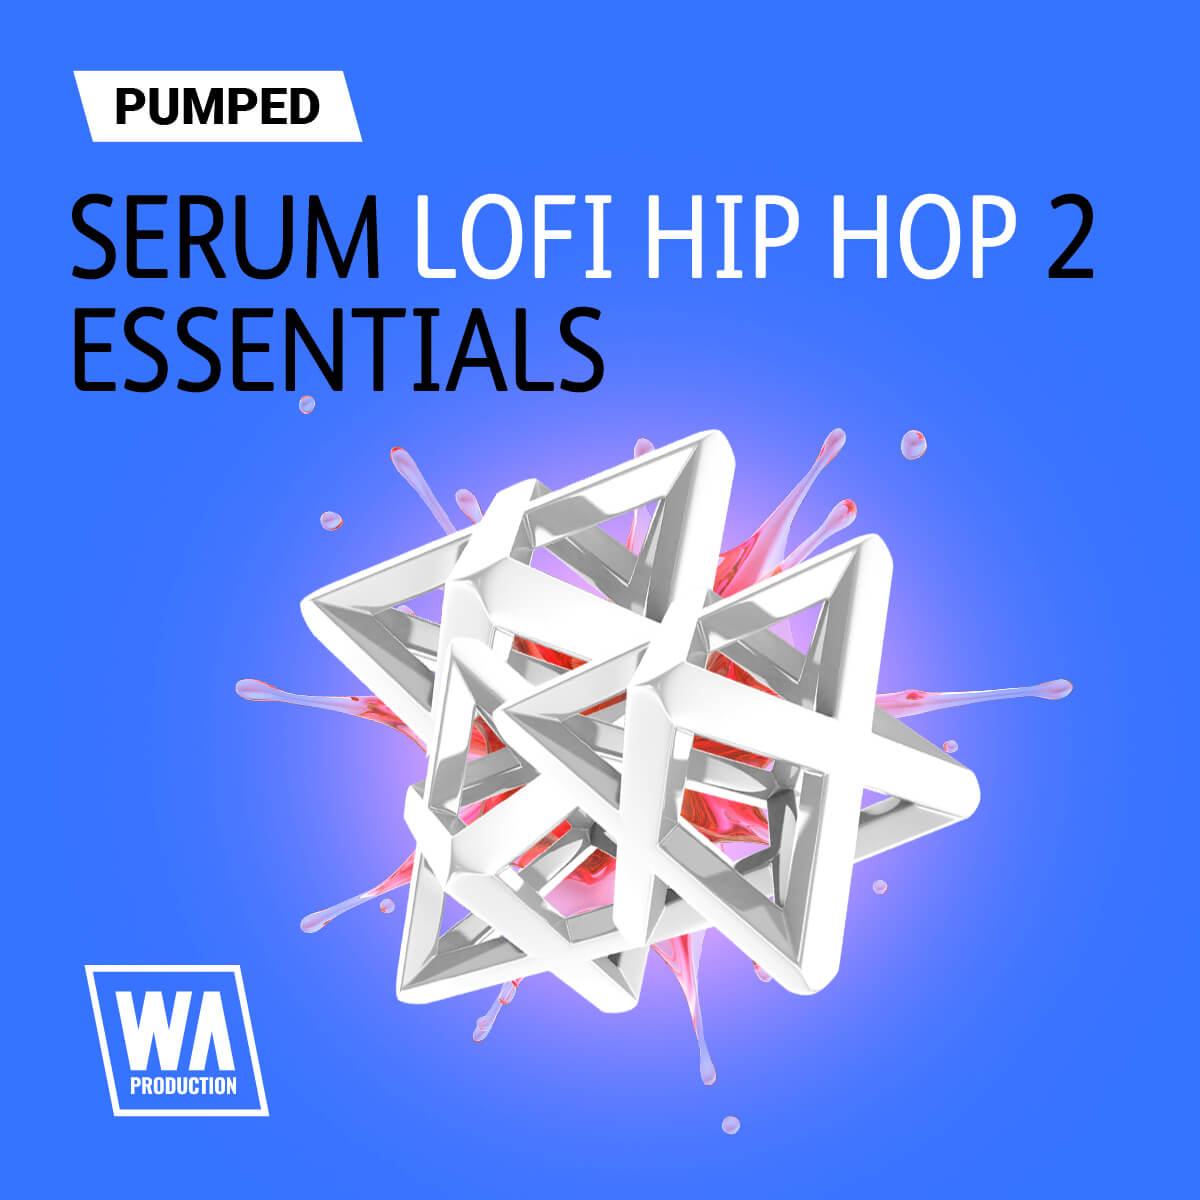 W.A Production Pumped: Serum Lofi Hip Hop Essentials 2